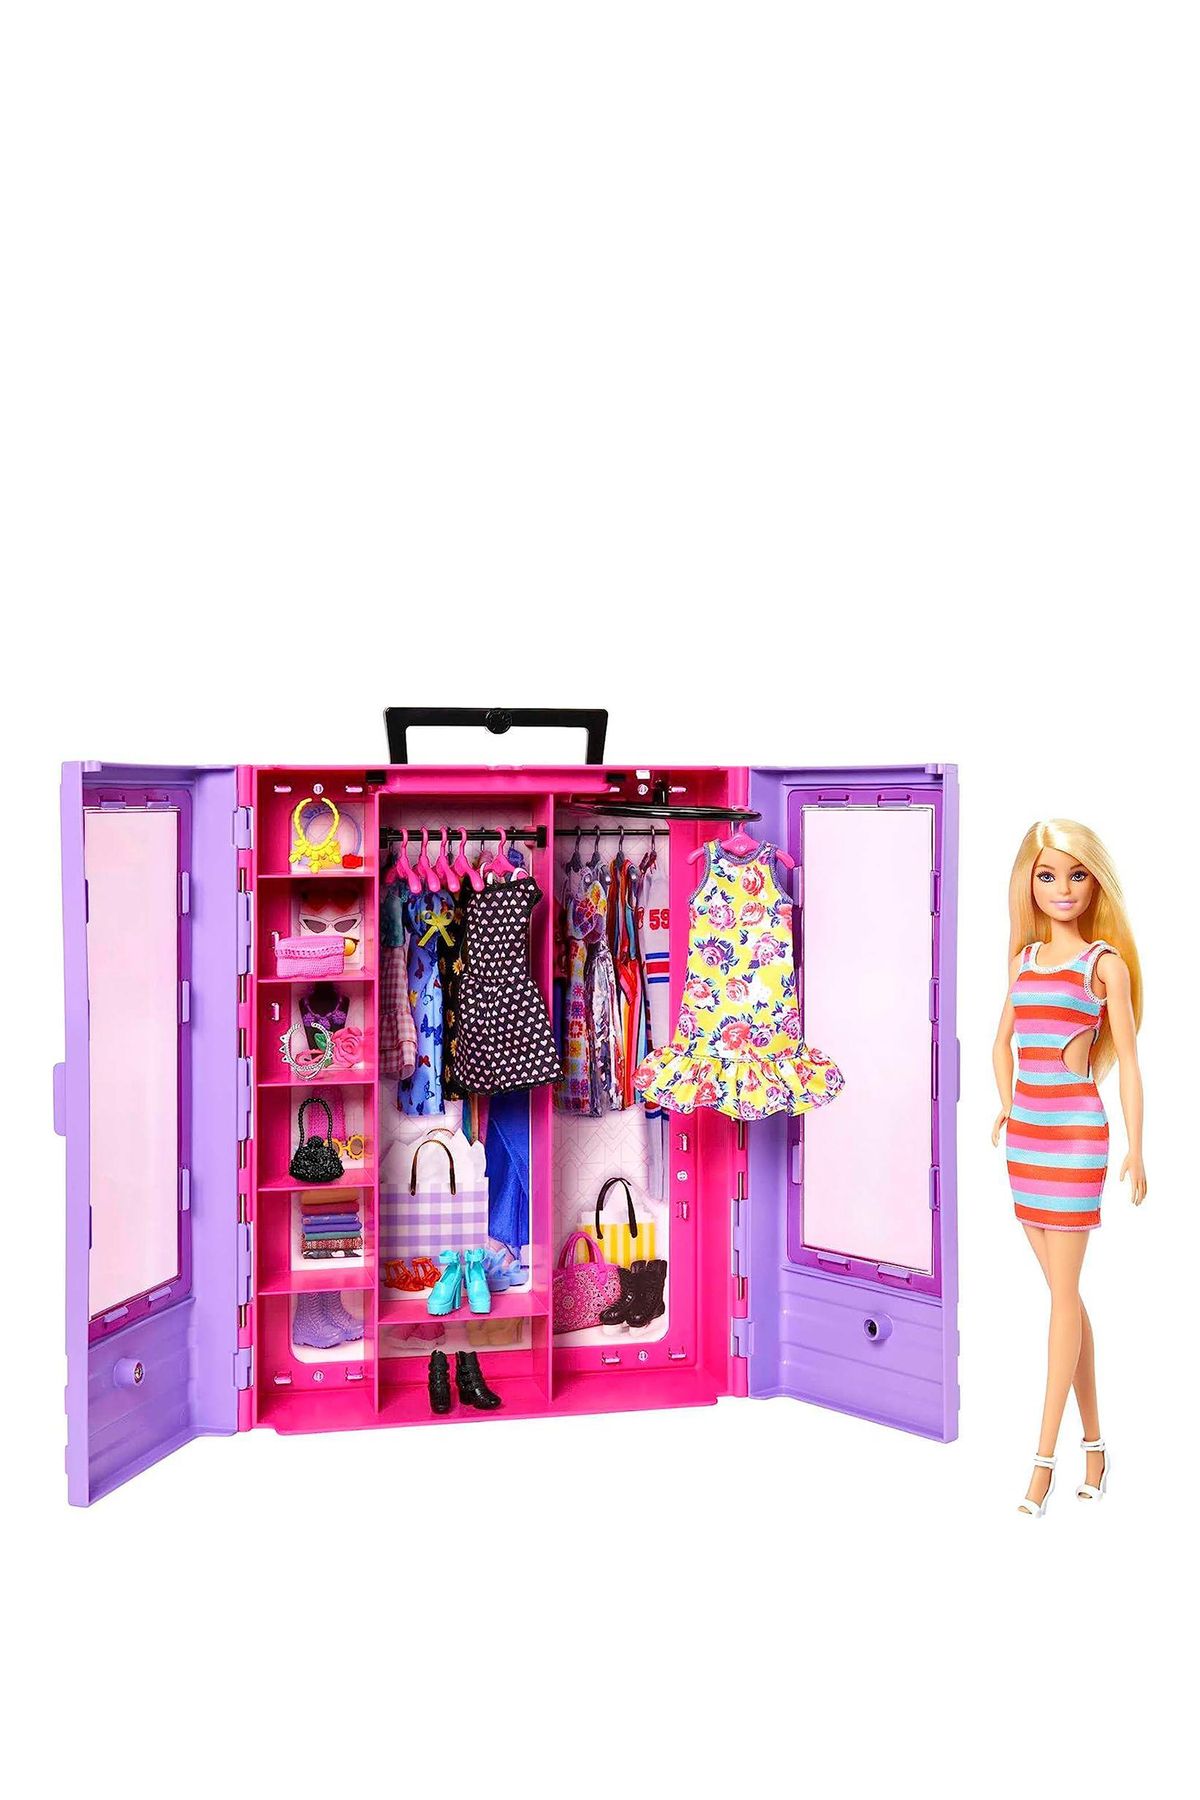 Barbie Pembe Gardırobu Oyun Seti HJL66